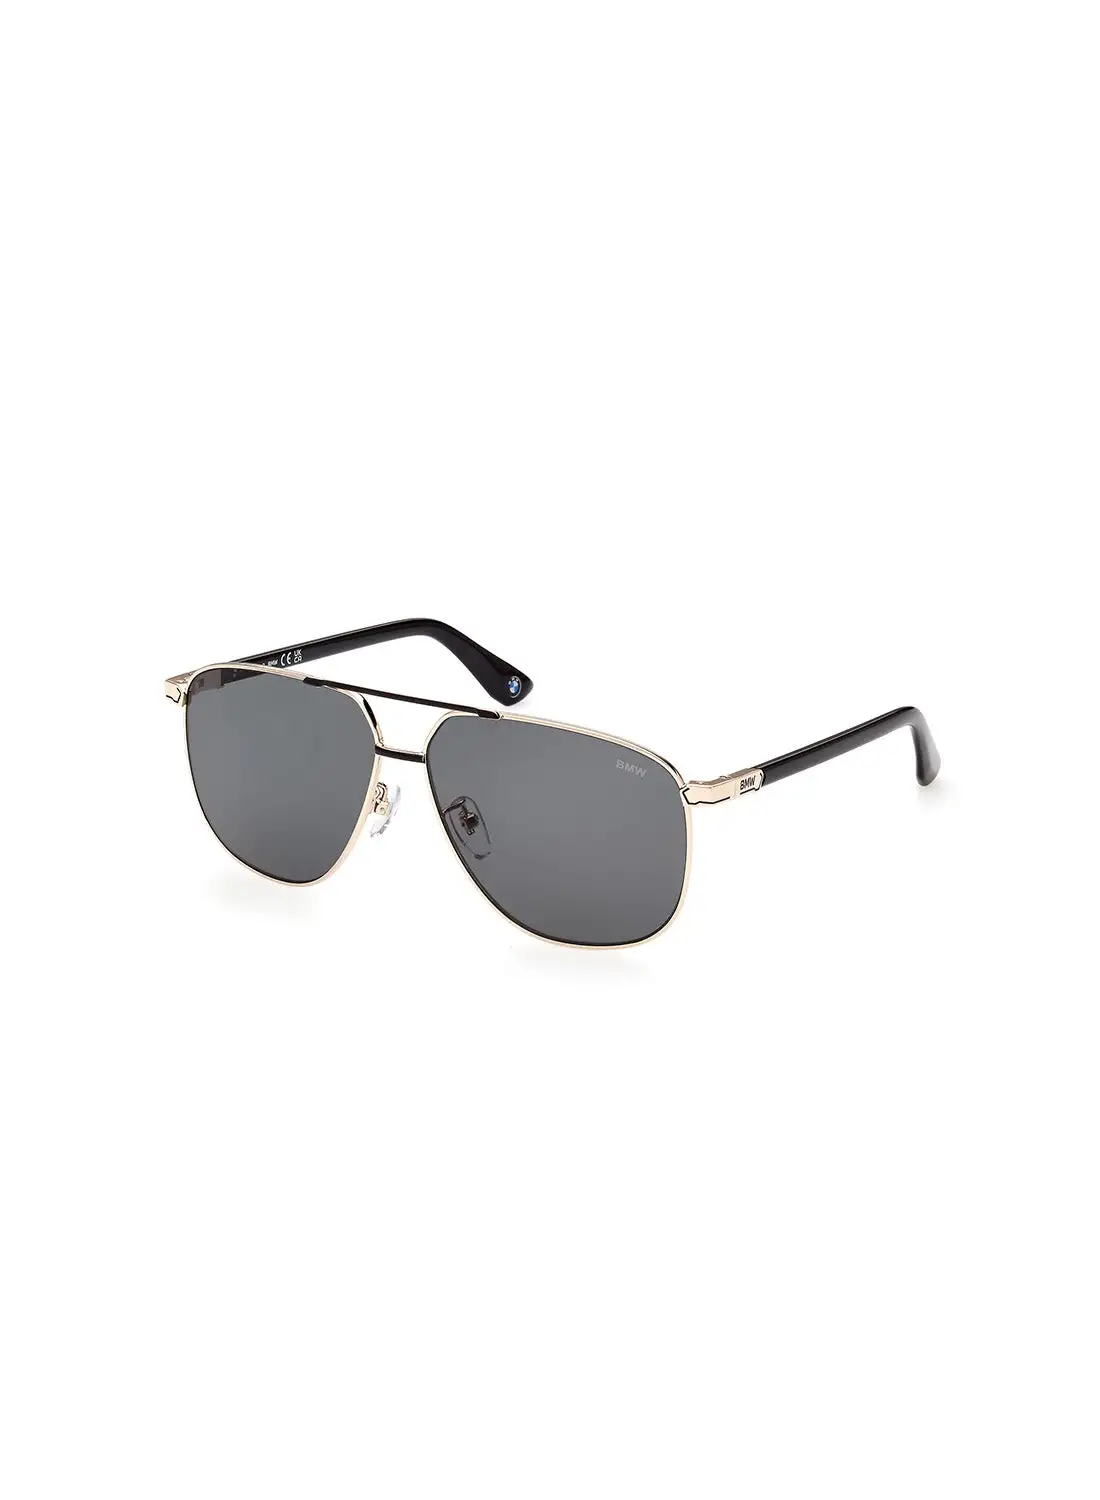 BMW Men's Polarized Sunglasses - BW003032D61 - Lens Size: 61 Mm